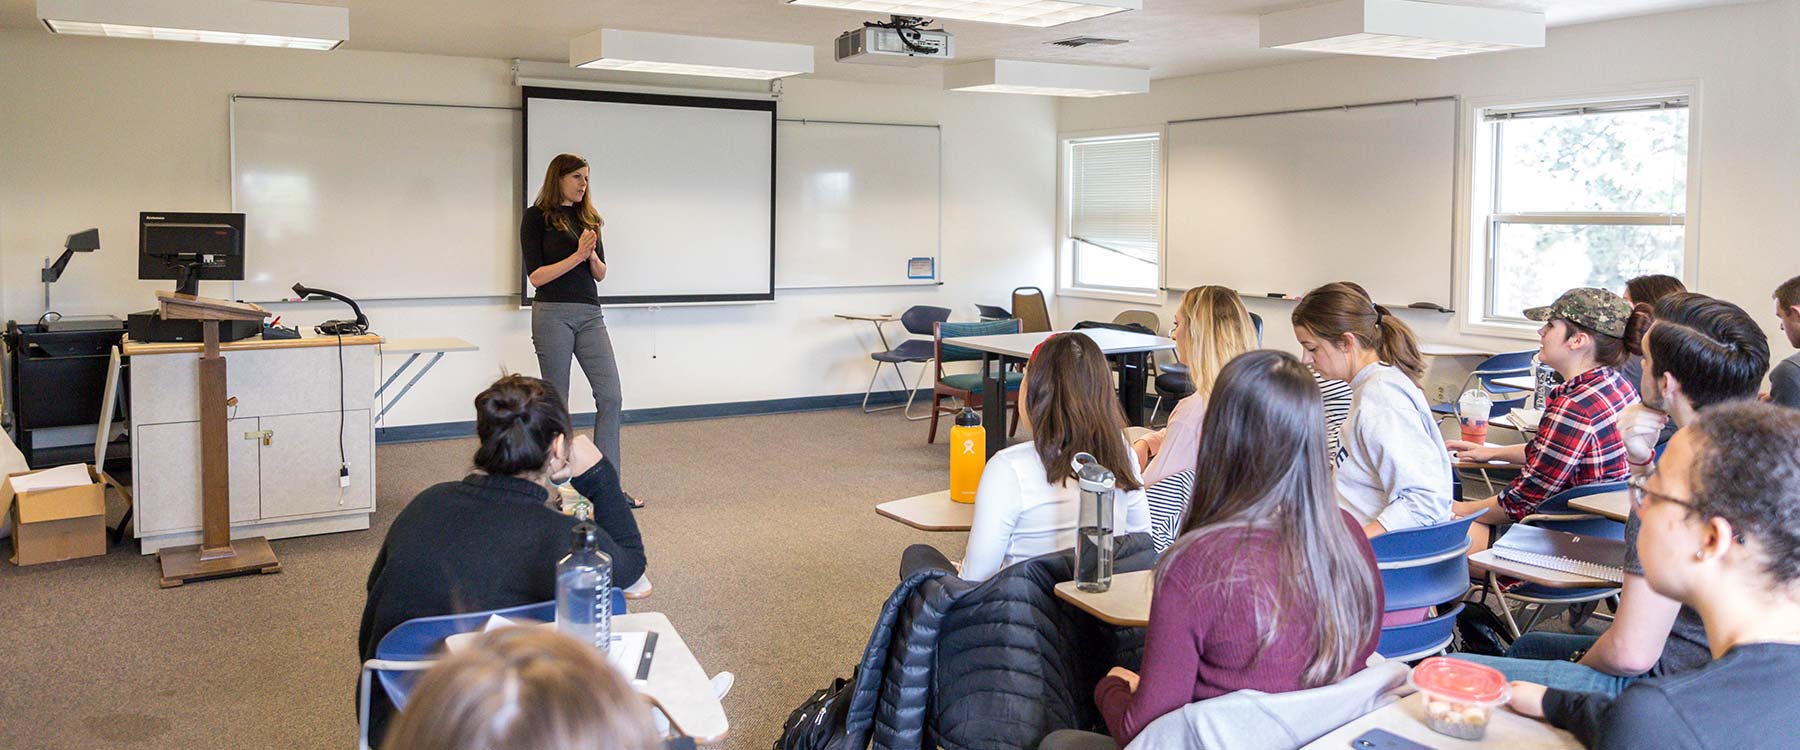 Sociology professor Stacy George talks teaches a class